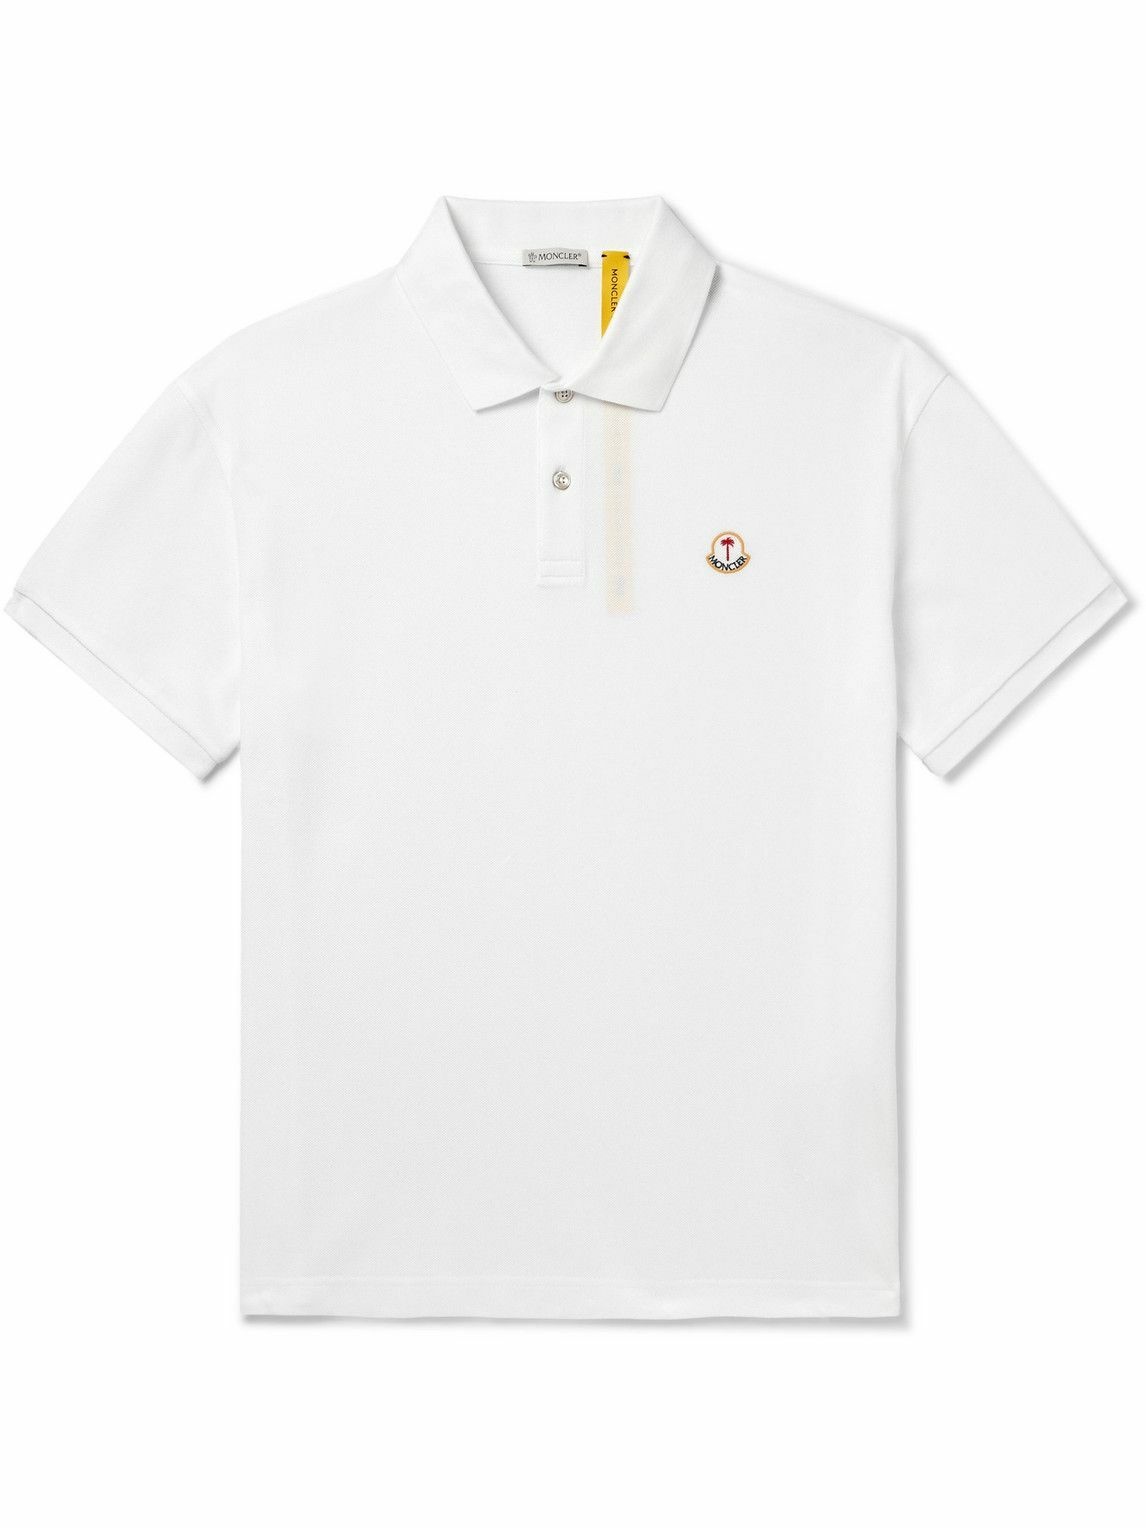 Moncler Genius - Palm Angels Logo-Embroidered Cotton-Piqué Polo Shirt ...